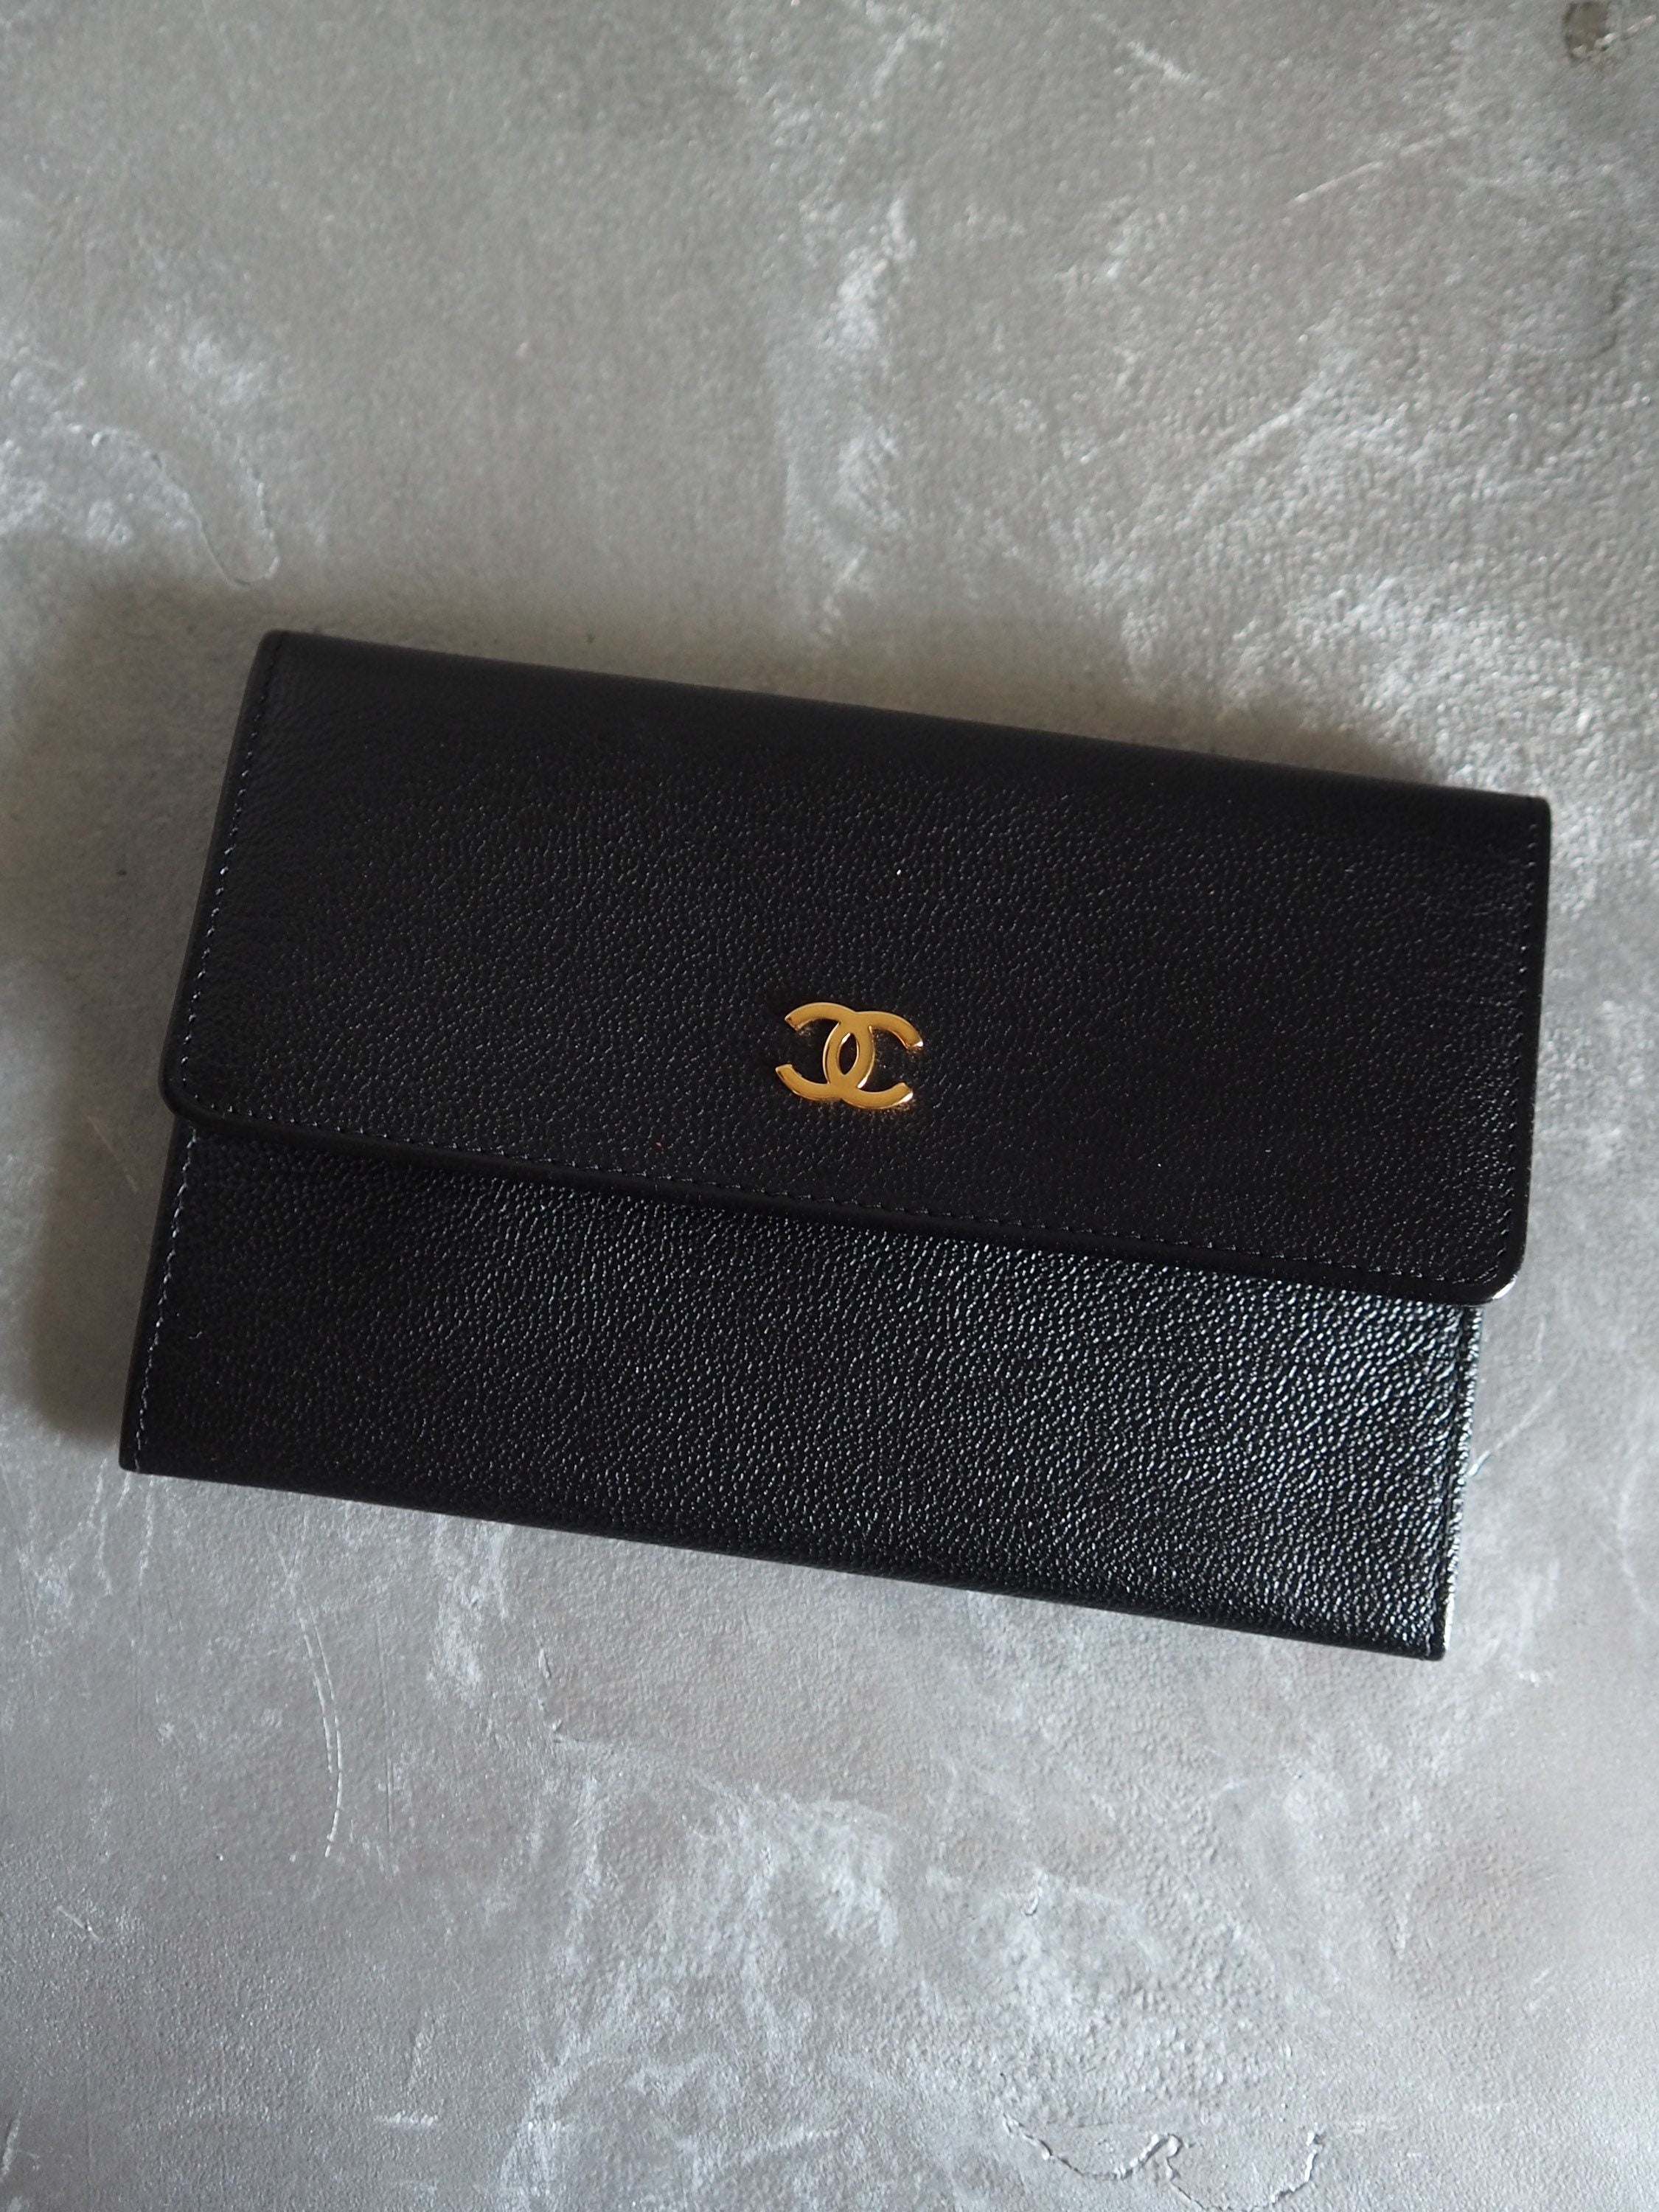 CHANEL COCO Wallet Purse Compact Leather Black Authentic Vintage Box